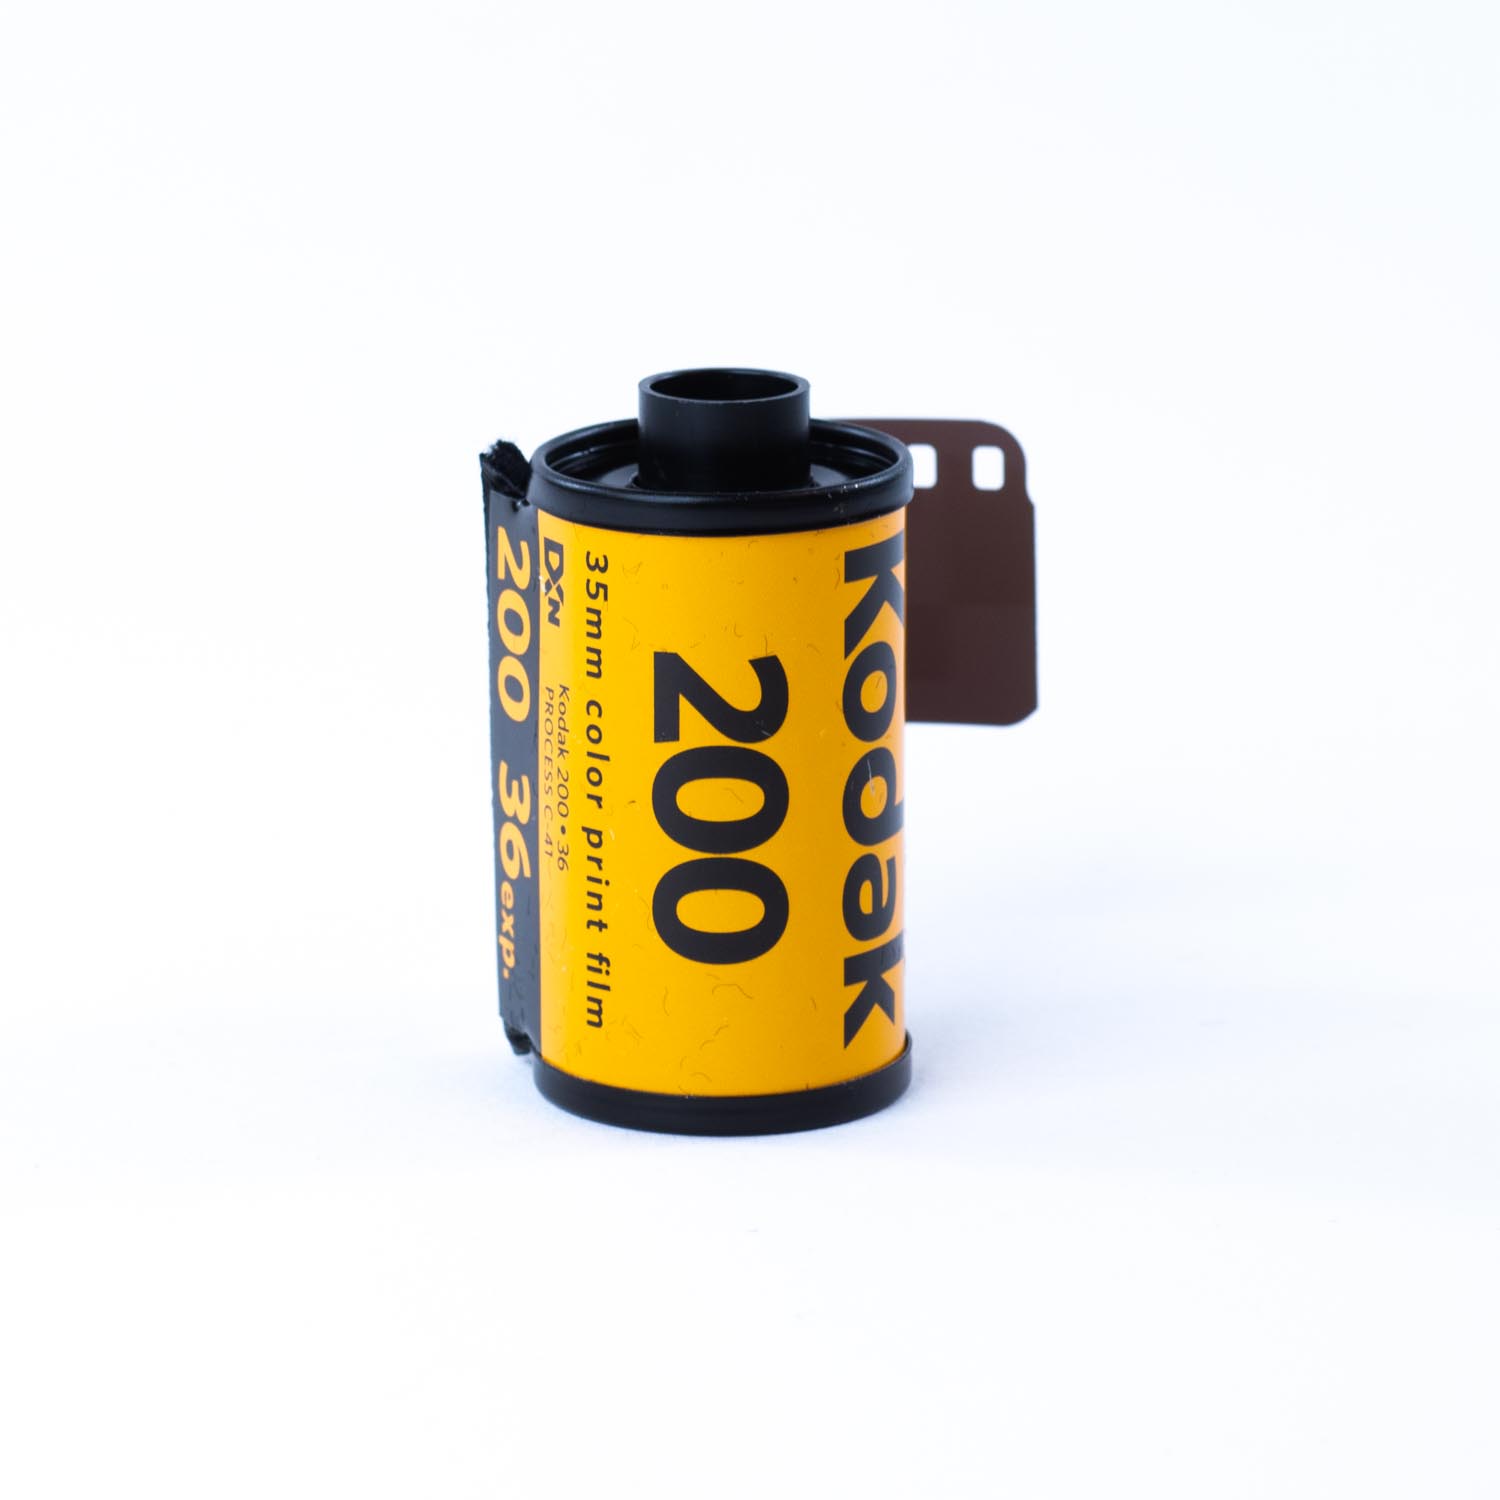 TVignette pour Kodak GOLD 200 - 135-36